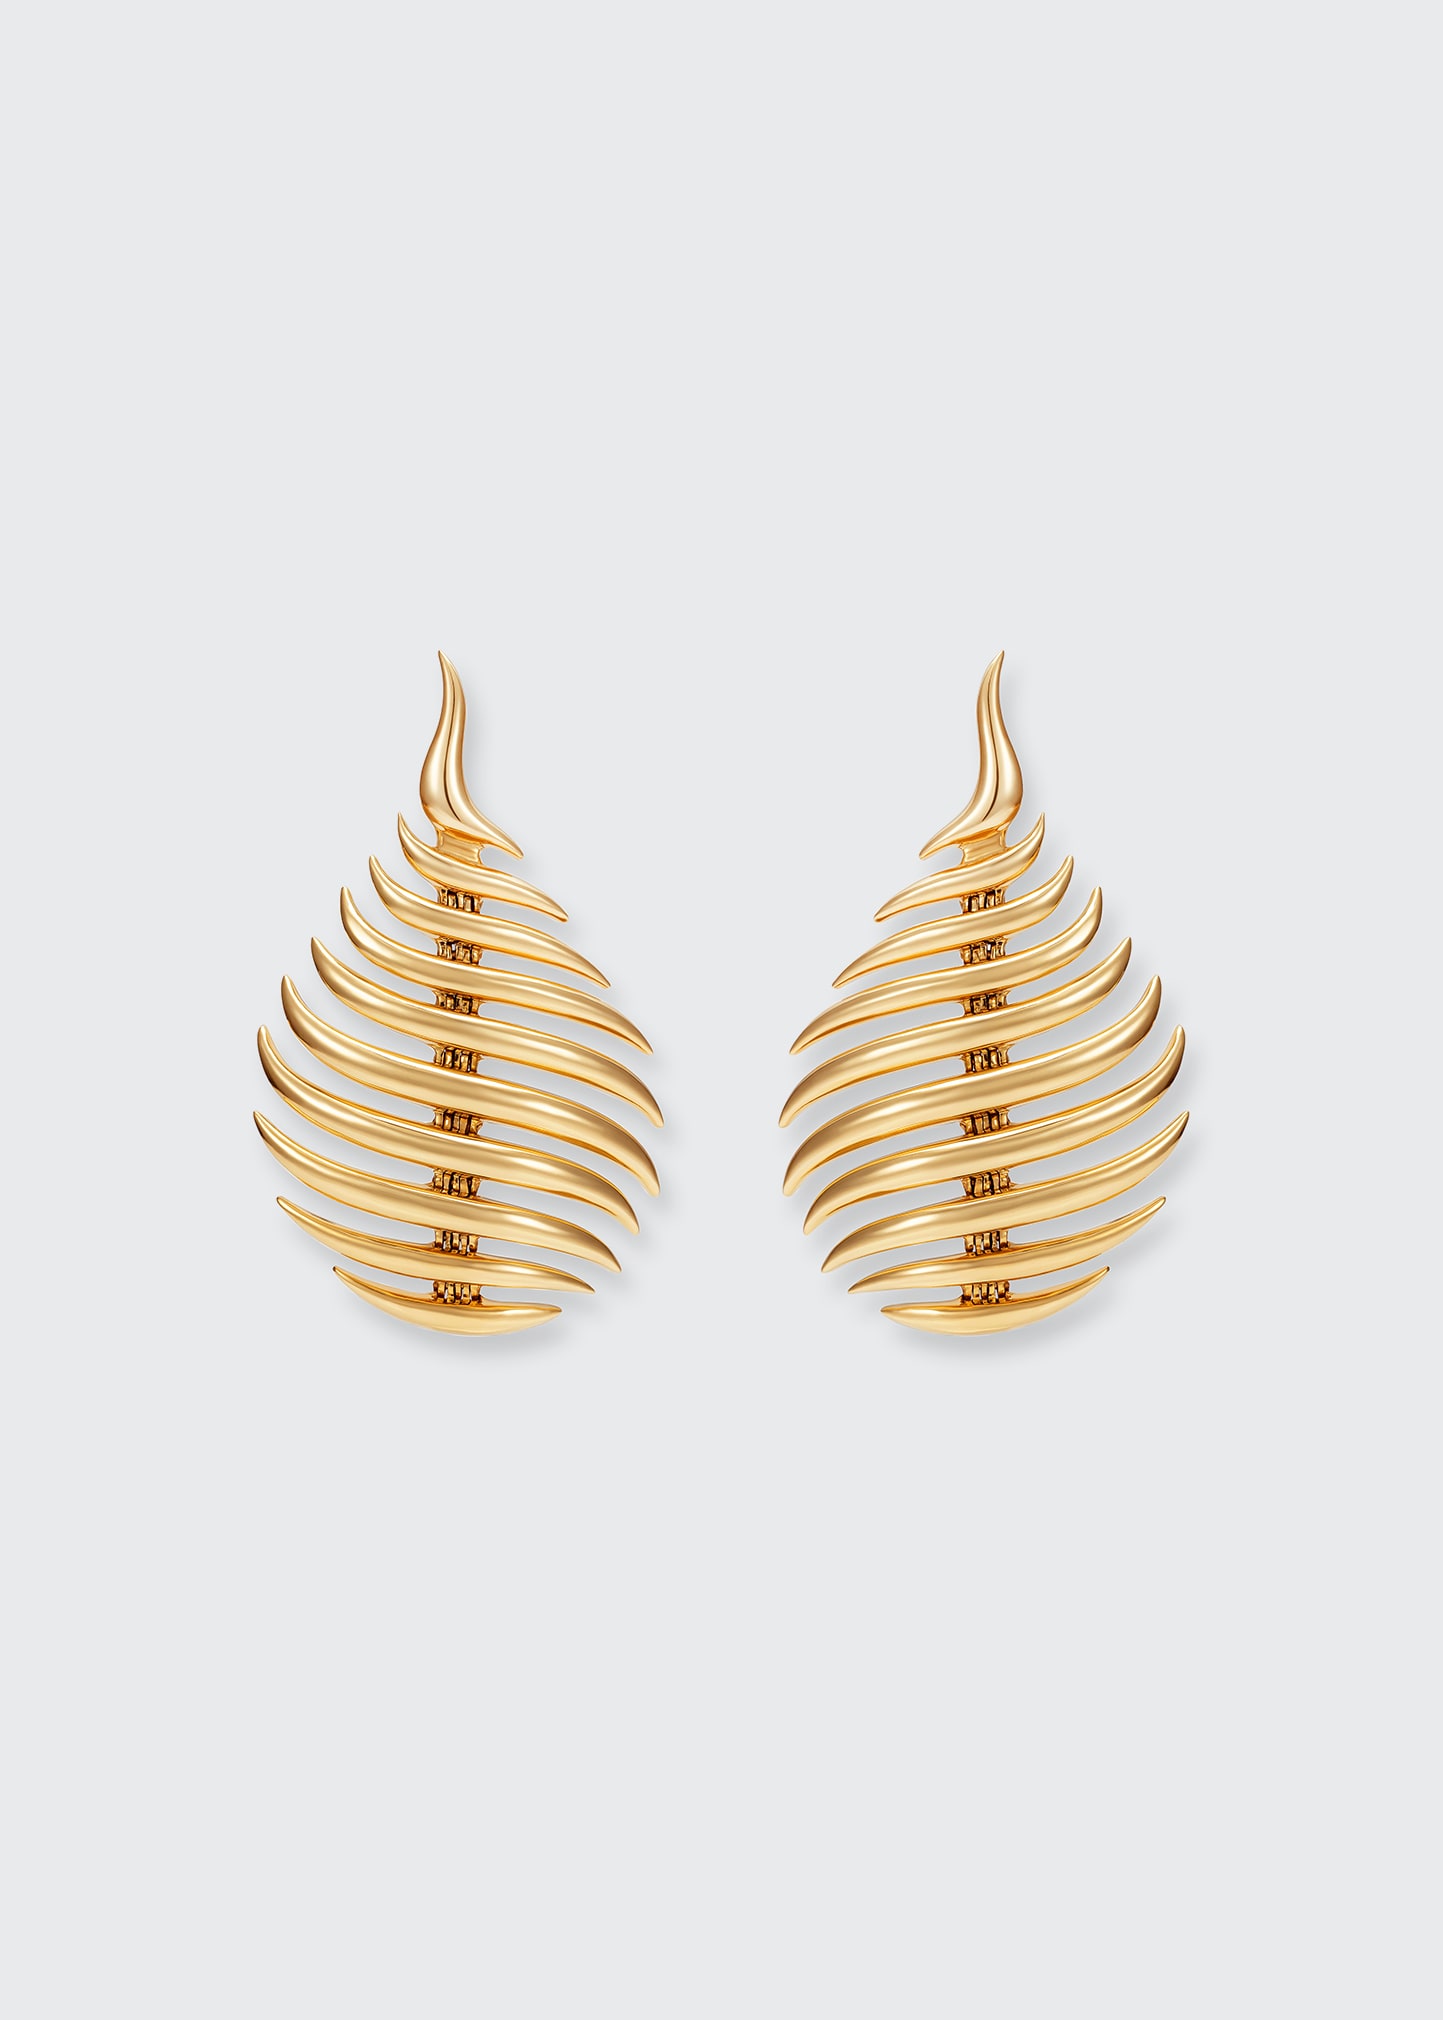 Fernando Jorge Flame Small Earrings in 18k Yellow Gold